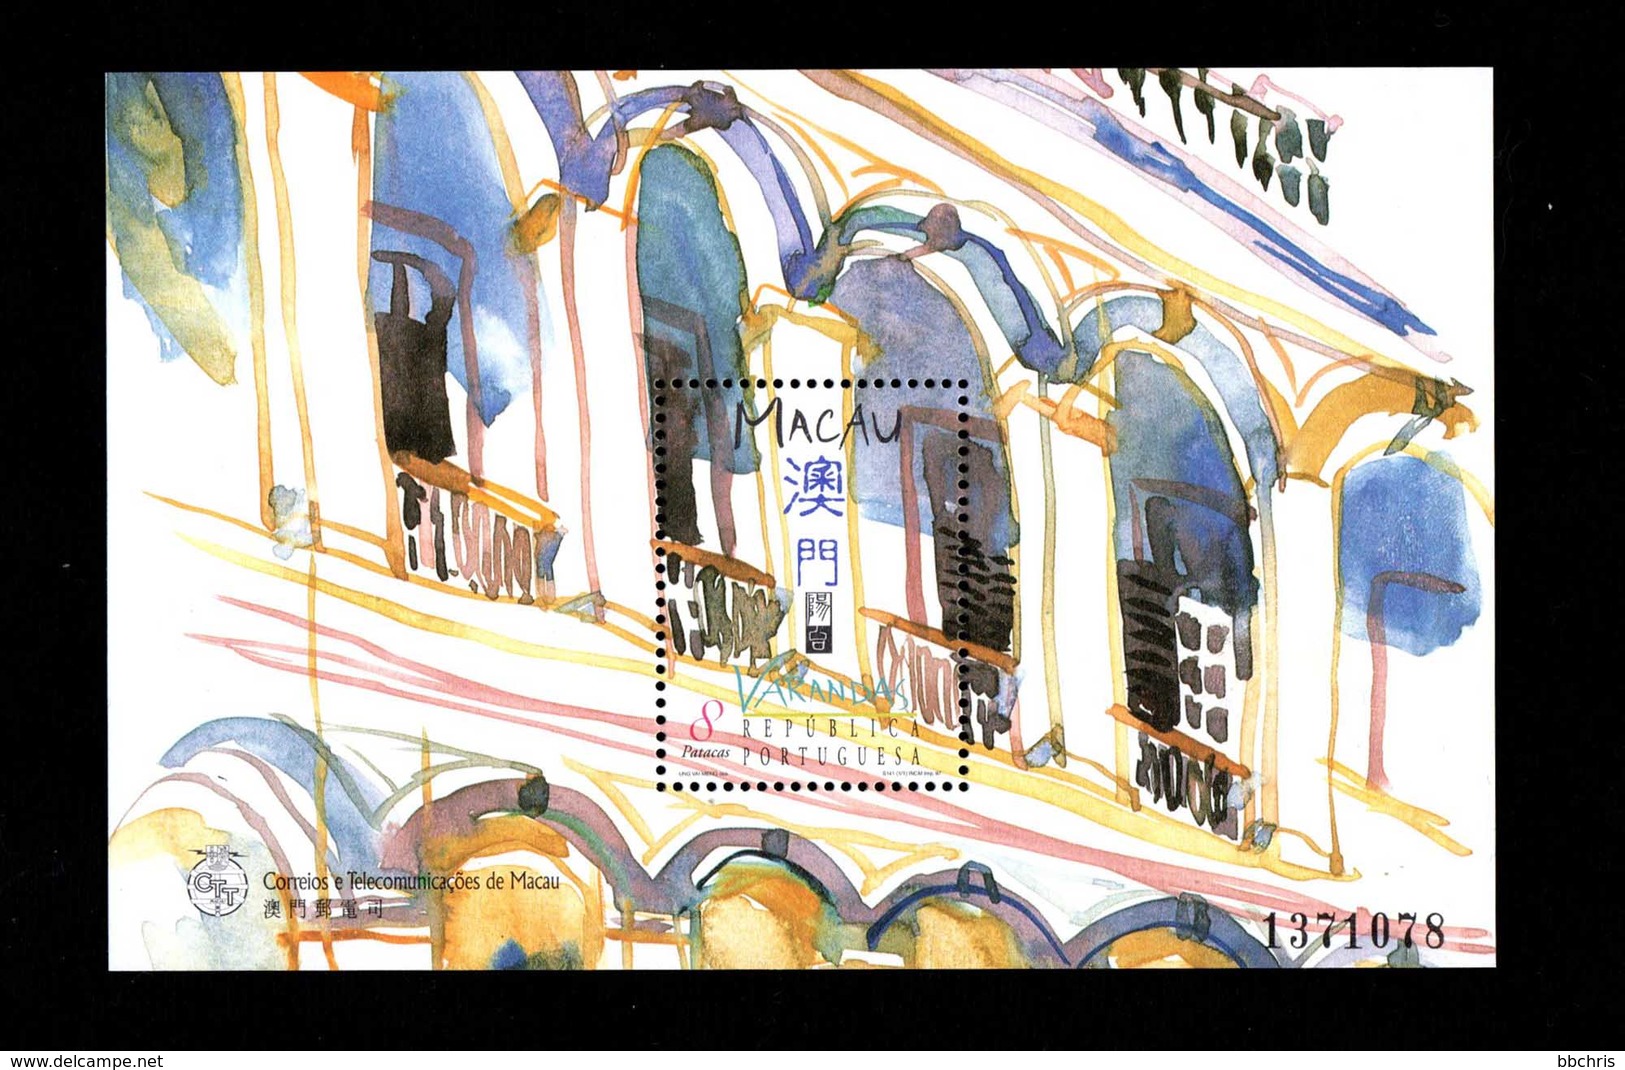 Macau Macao 1997 Varandas Balconies Painting Souvenir Sheet MNH Mint - Postzegelboekjes